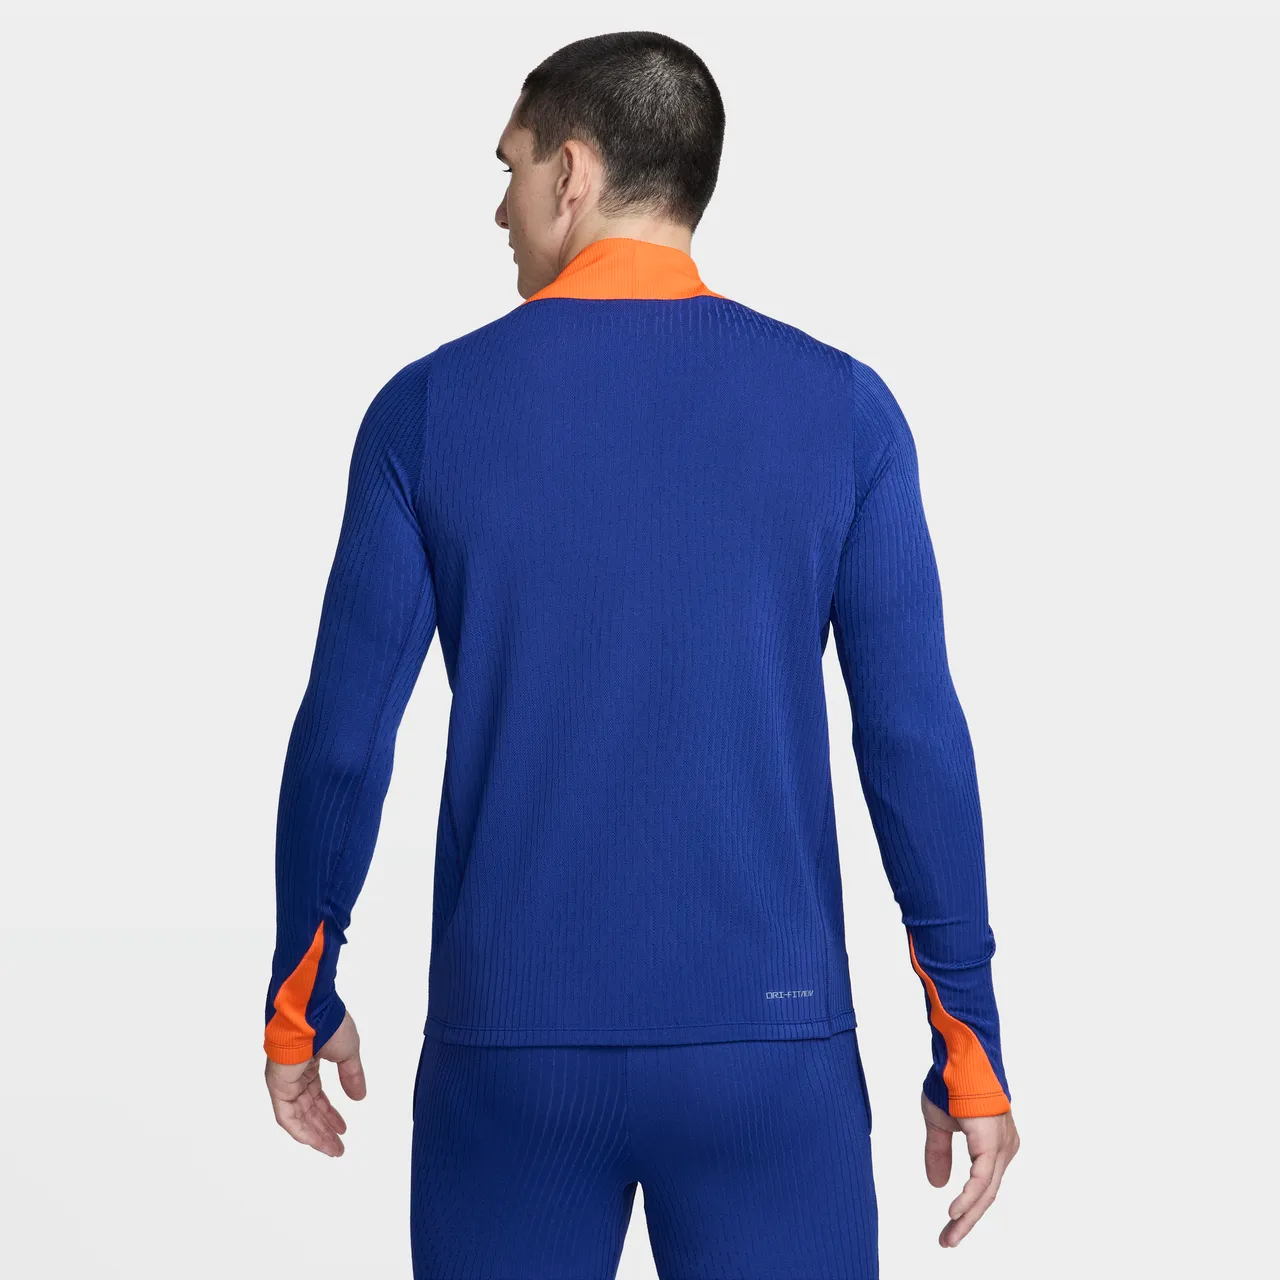 Nederland Strike Elite Nike Dri-FIT ADV knit voetbaltrainingstop voor heren - Blauw